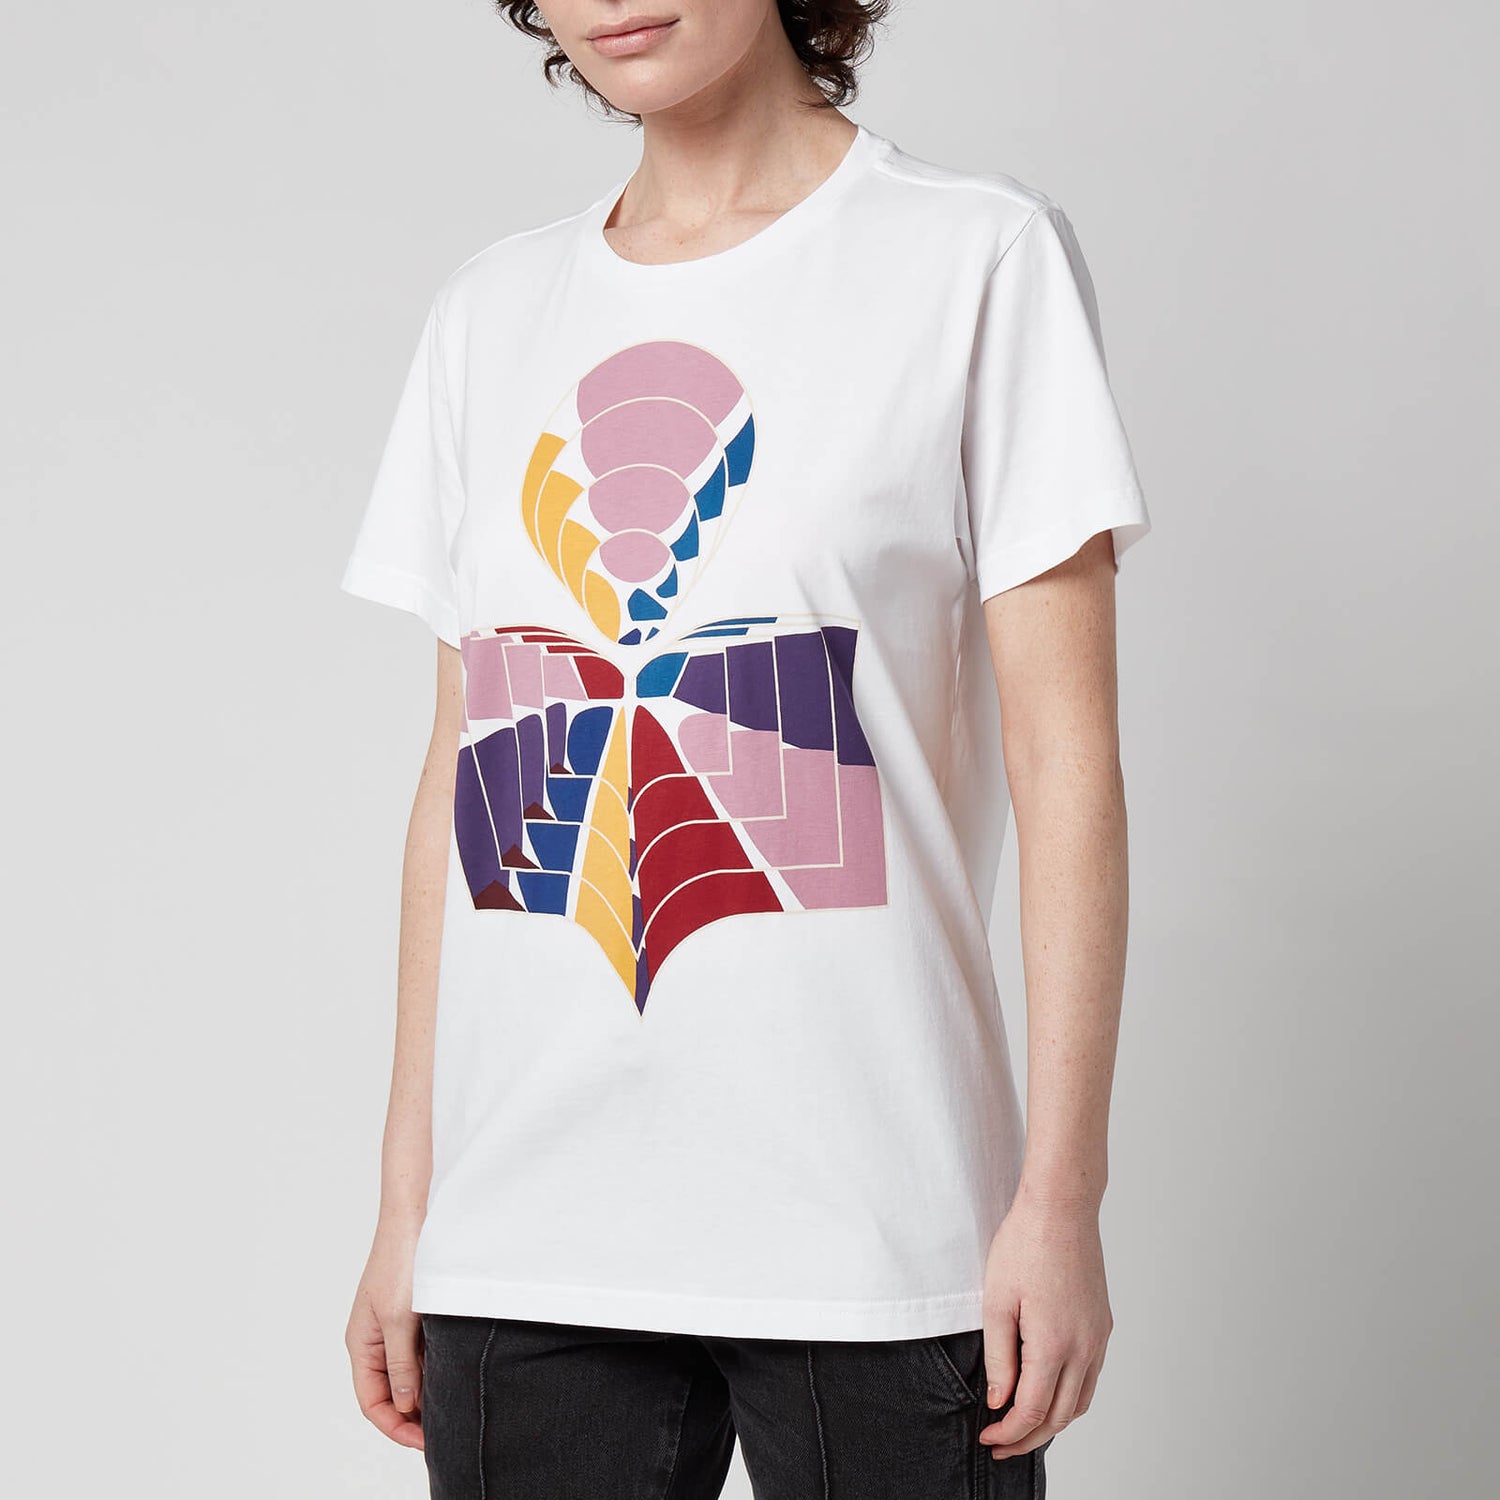 Isabel Marant Étoile Women's Zaof T-Shirt - White - XS